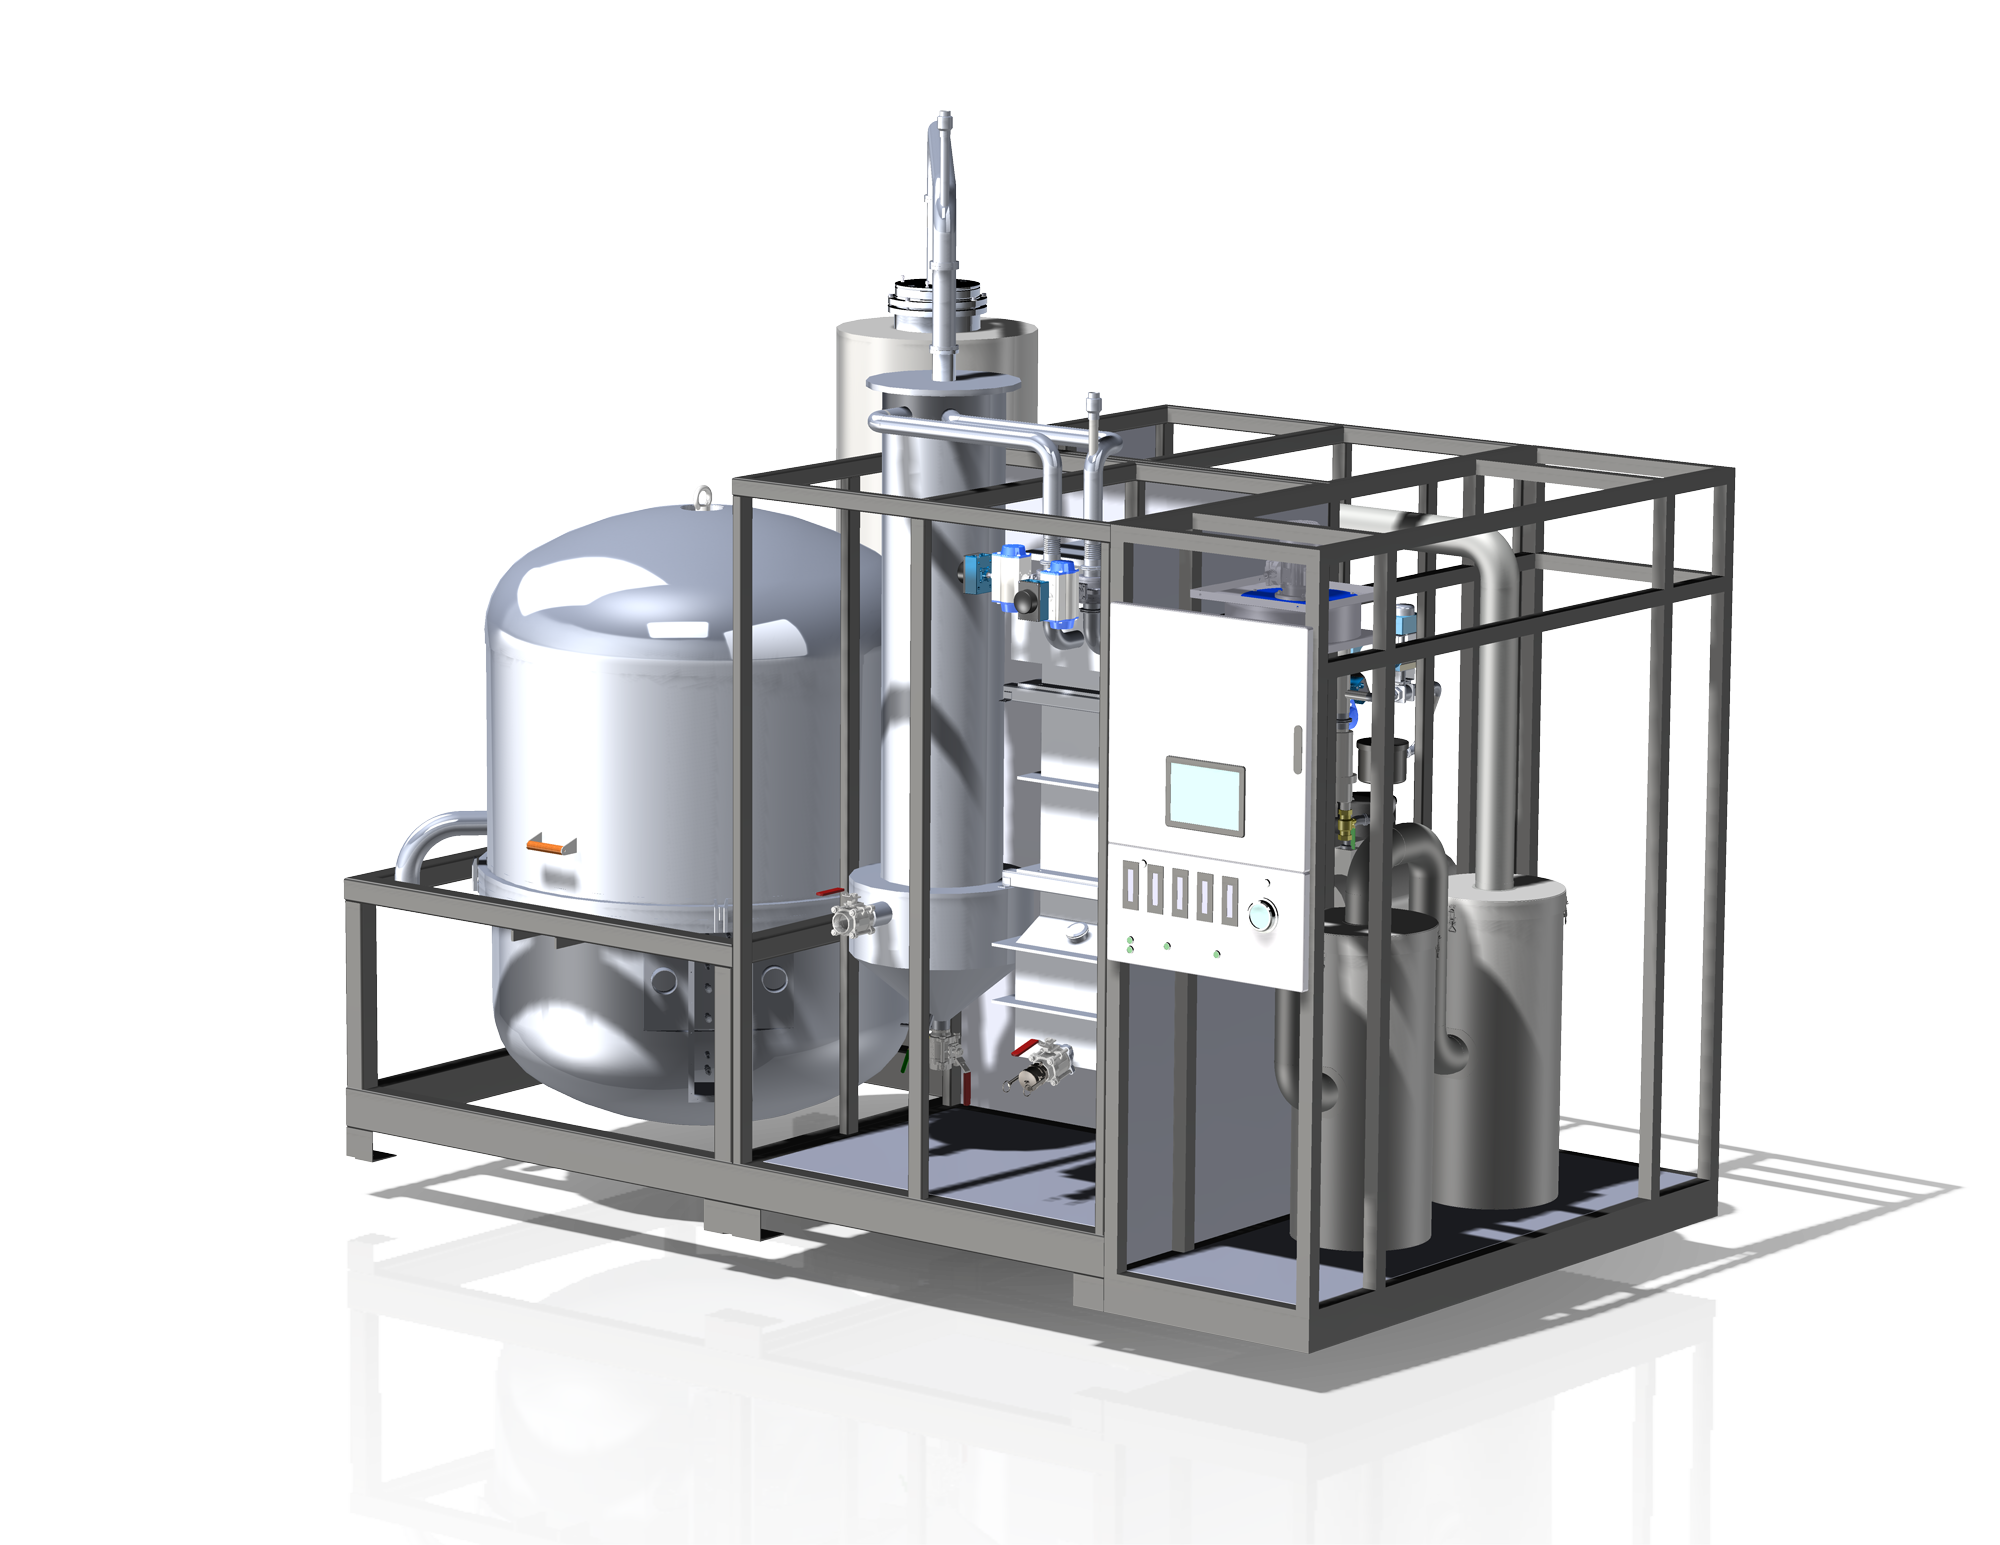 Destilator šaržnog procesa (BPD)